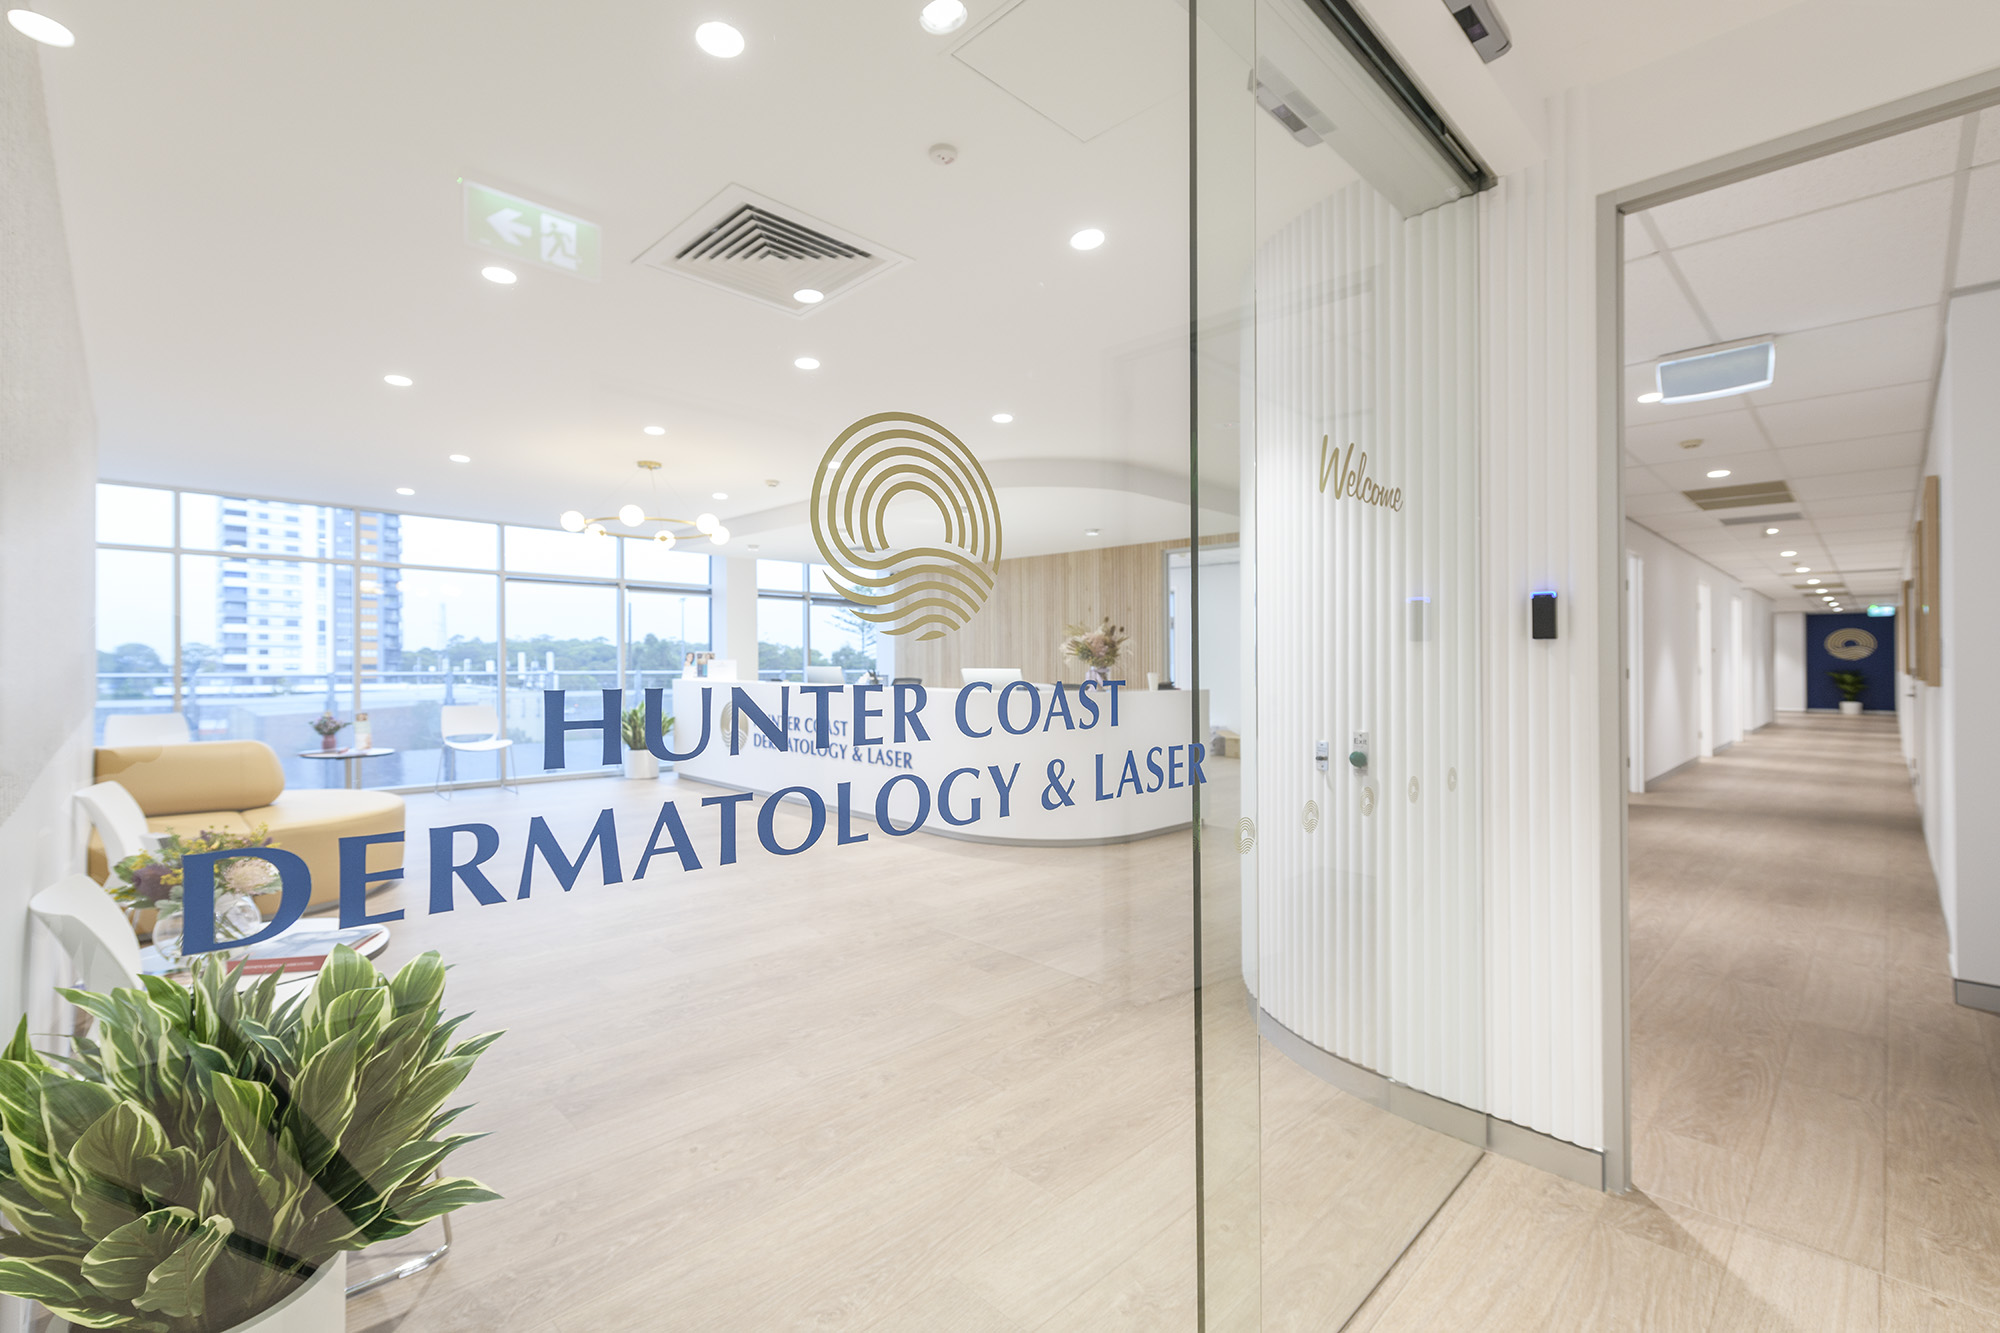 Featured image for “Hunter Coast Dermatology & Laser”